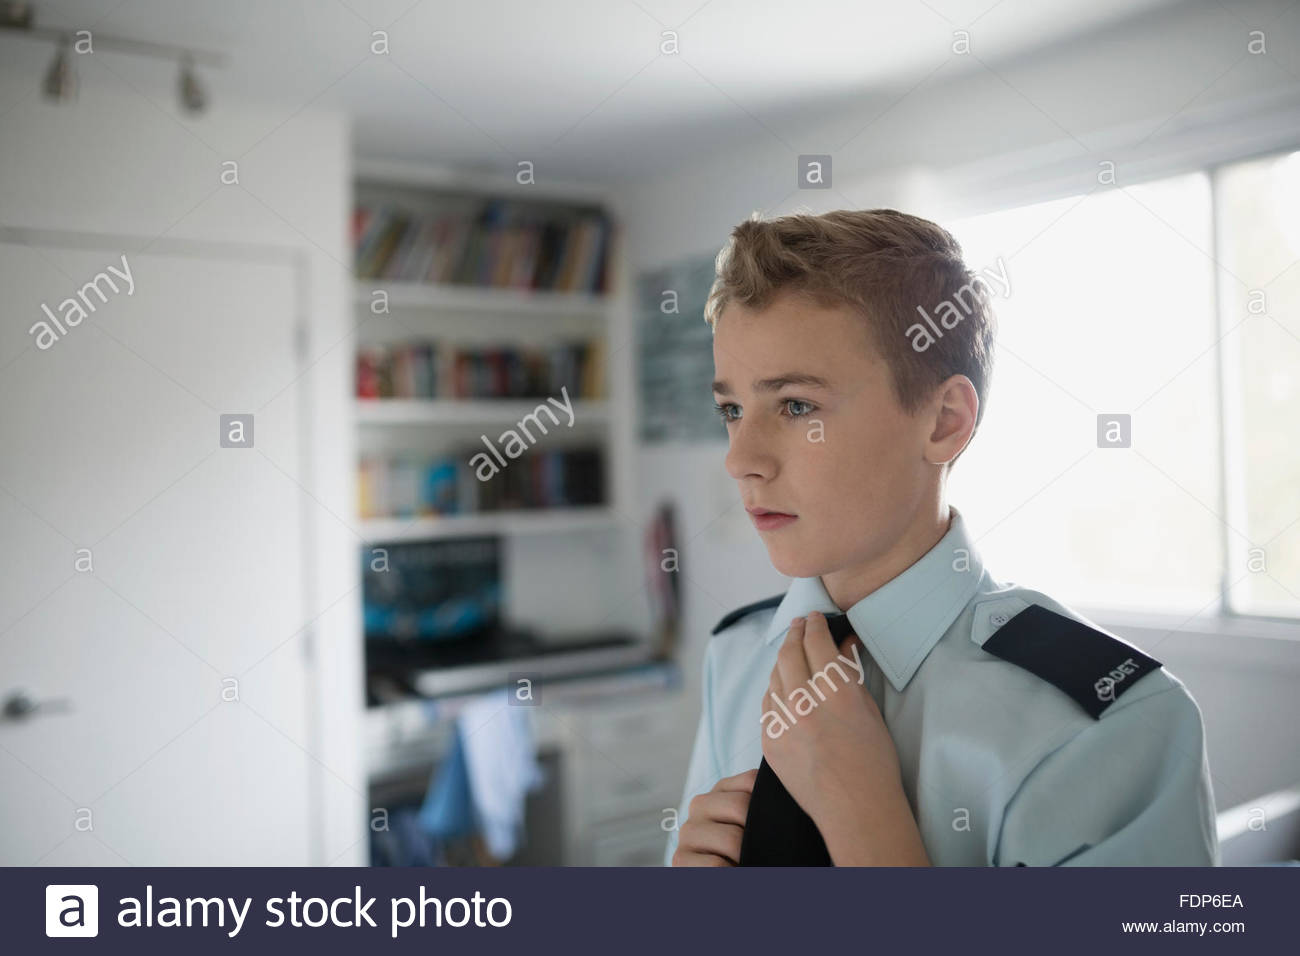 Boy adjusting cadet uniform tie Stock Photo